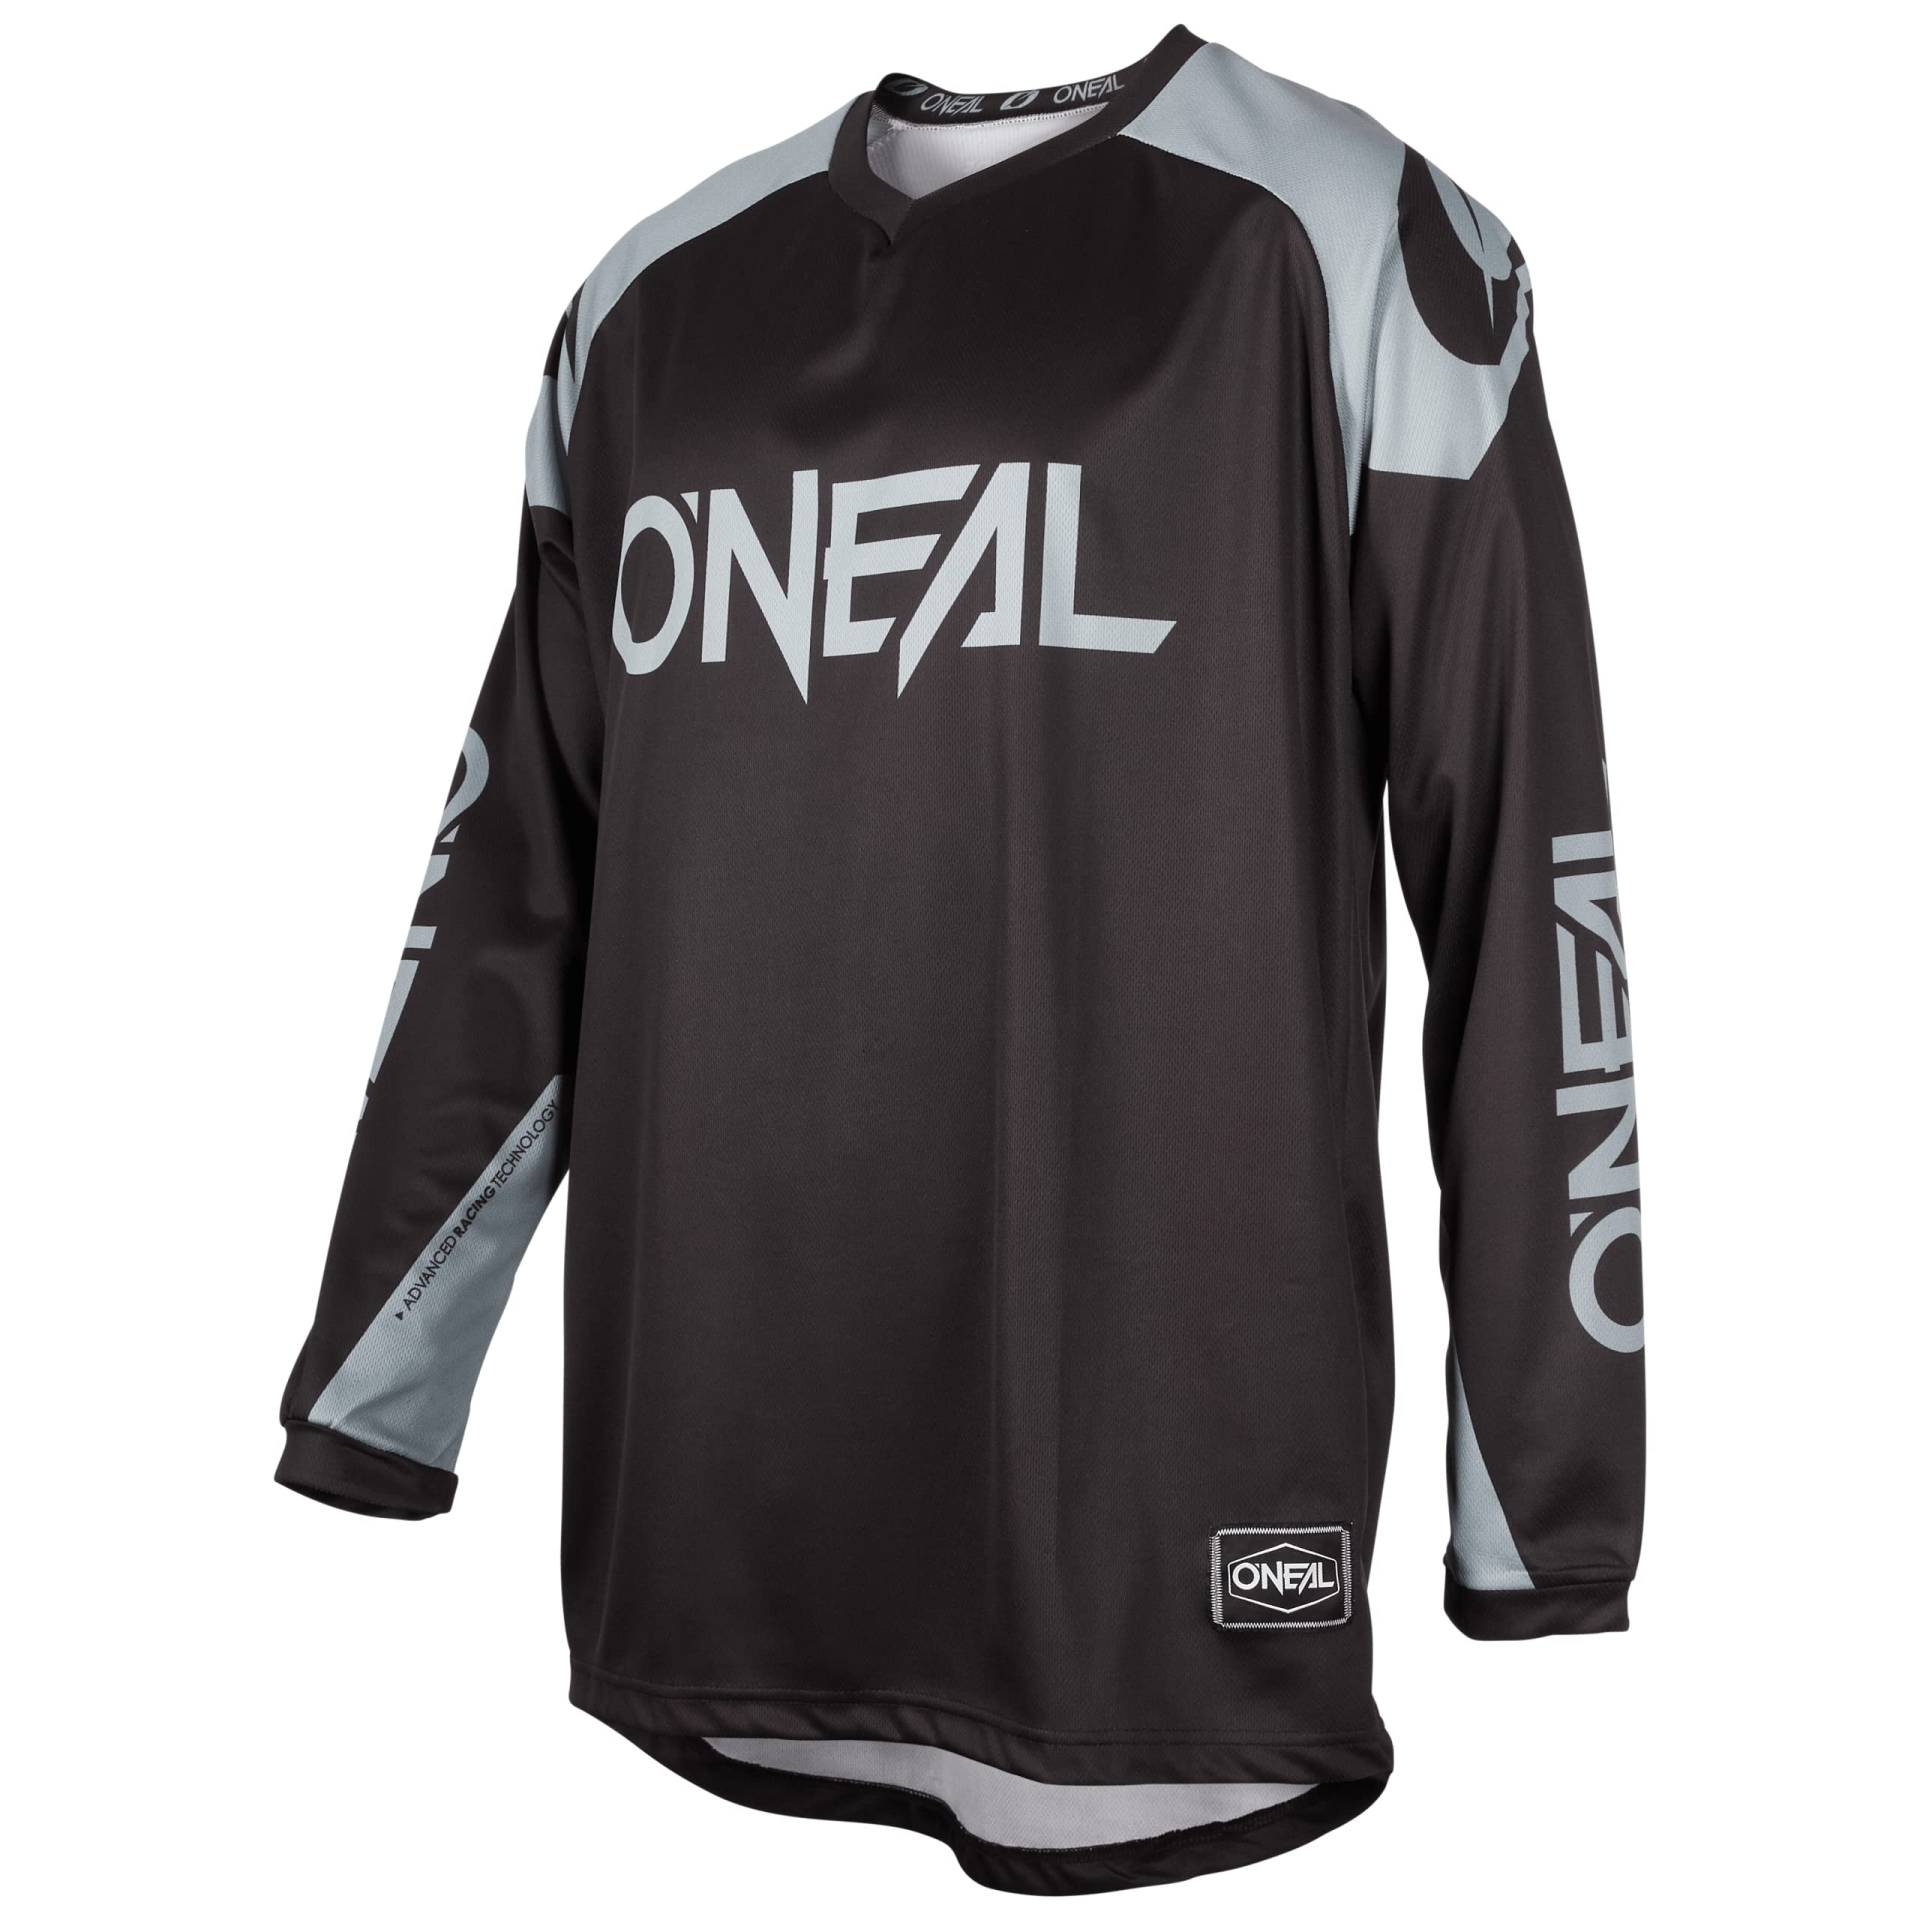 O'NEAL | Jersey | Enduro Motocross | Atmungsaktives Material, Maximale Bewegungsfreiheit, Verlängerter Rücken | Jersey Matrix Ridewear | Erwachsene | Schwarz Grau | Größe L von O'NEAL